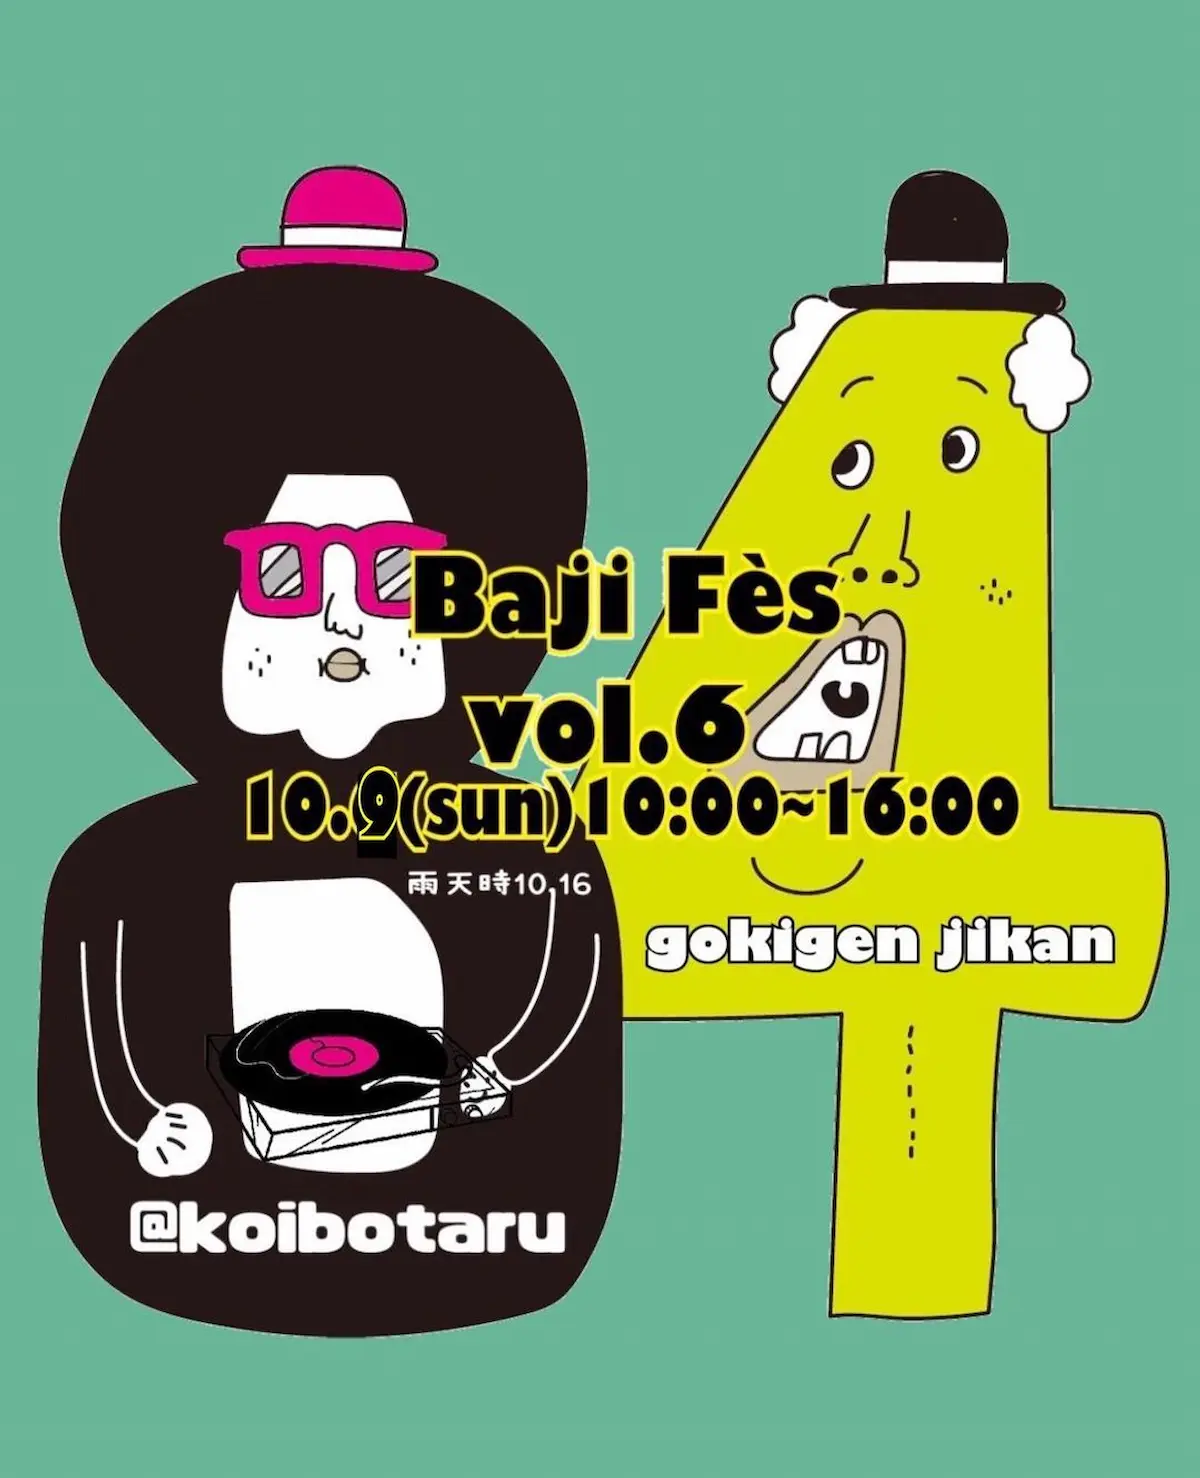 Baji Fès vol.6 gokigen jikanって人気イベントが開催されるみたい。10月9日（筑後市）